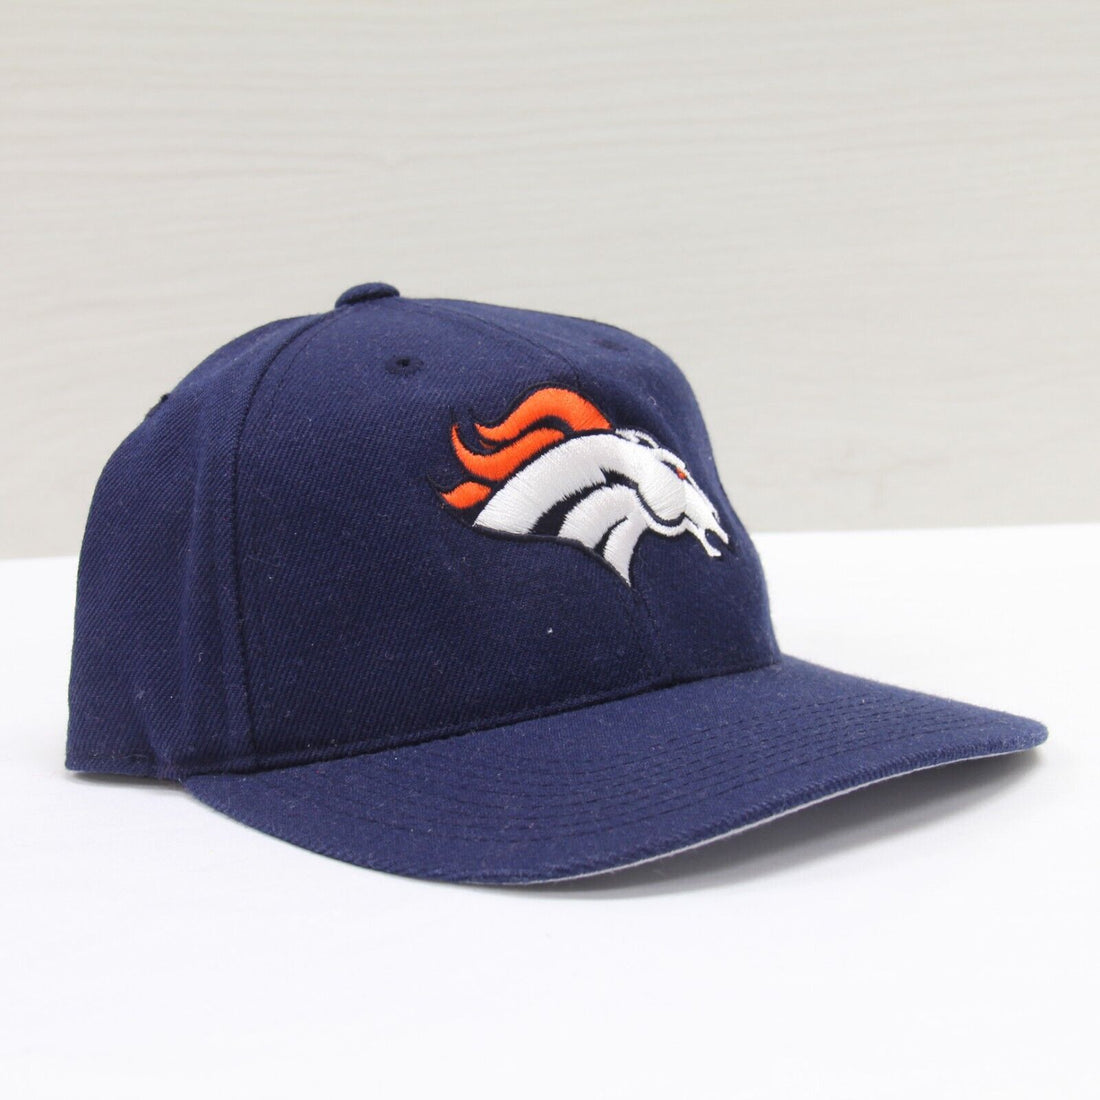 Vintage Denver Broncos Sports Specialties Wool Fitted Hat Cap 7 1/8 NFL